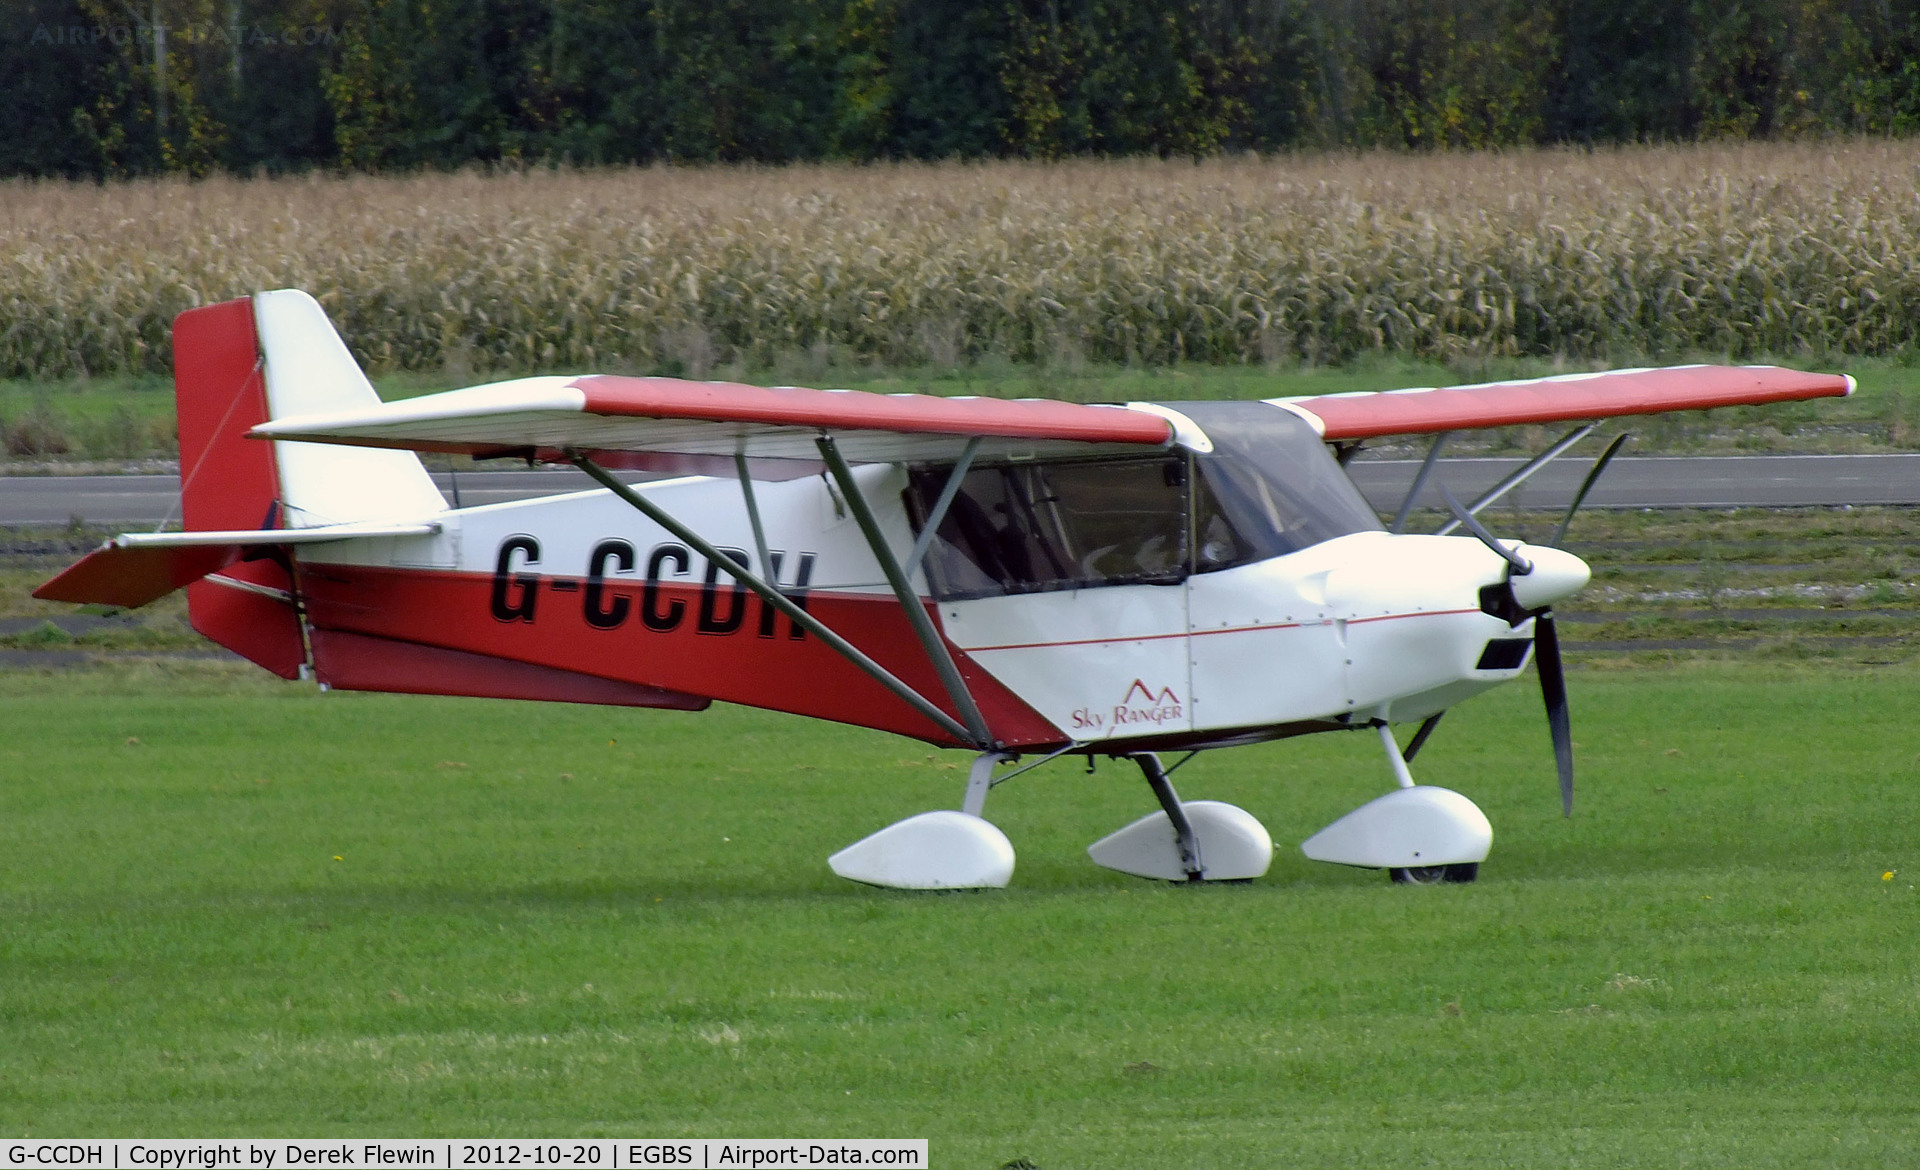 G-CCDH, 2003 Hepworth Skyranger 912(2) C/N BMAA/HB/233, EGBS resident.